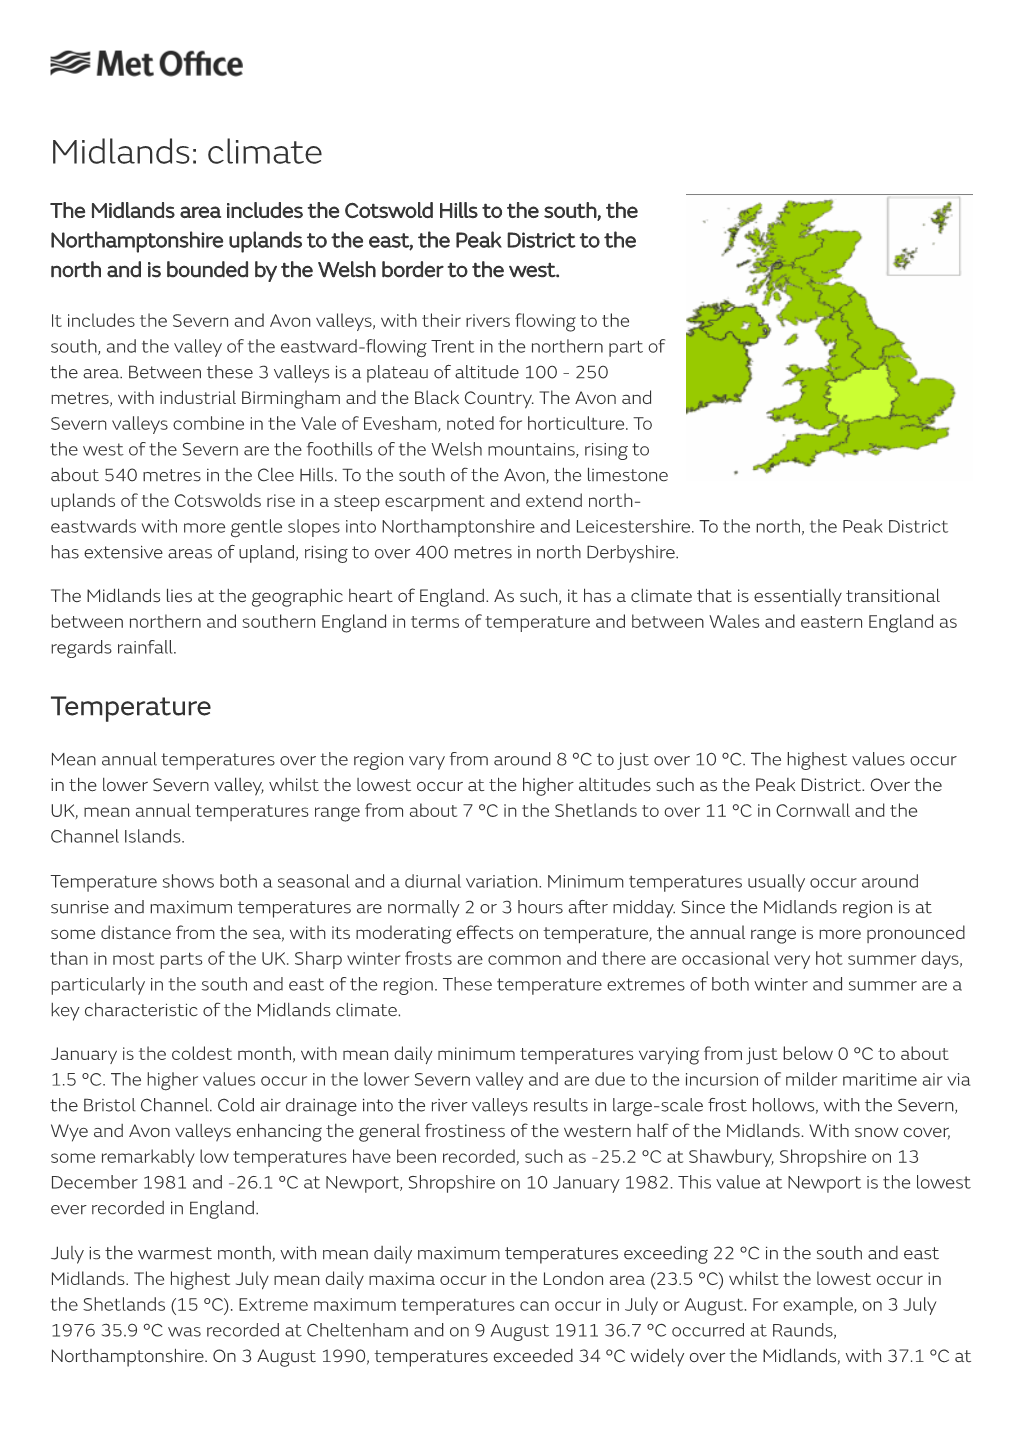 Midlands: Climate